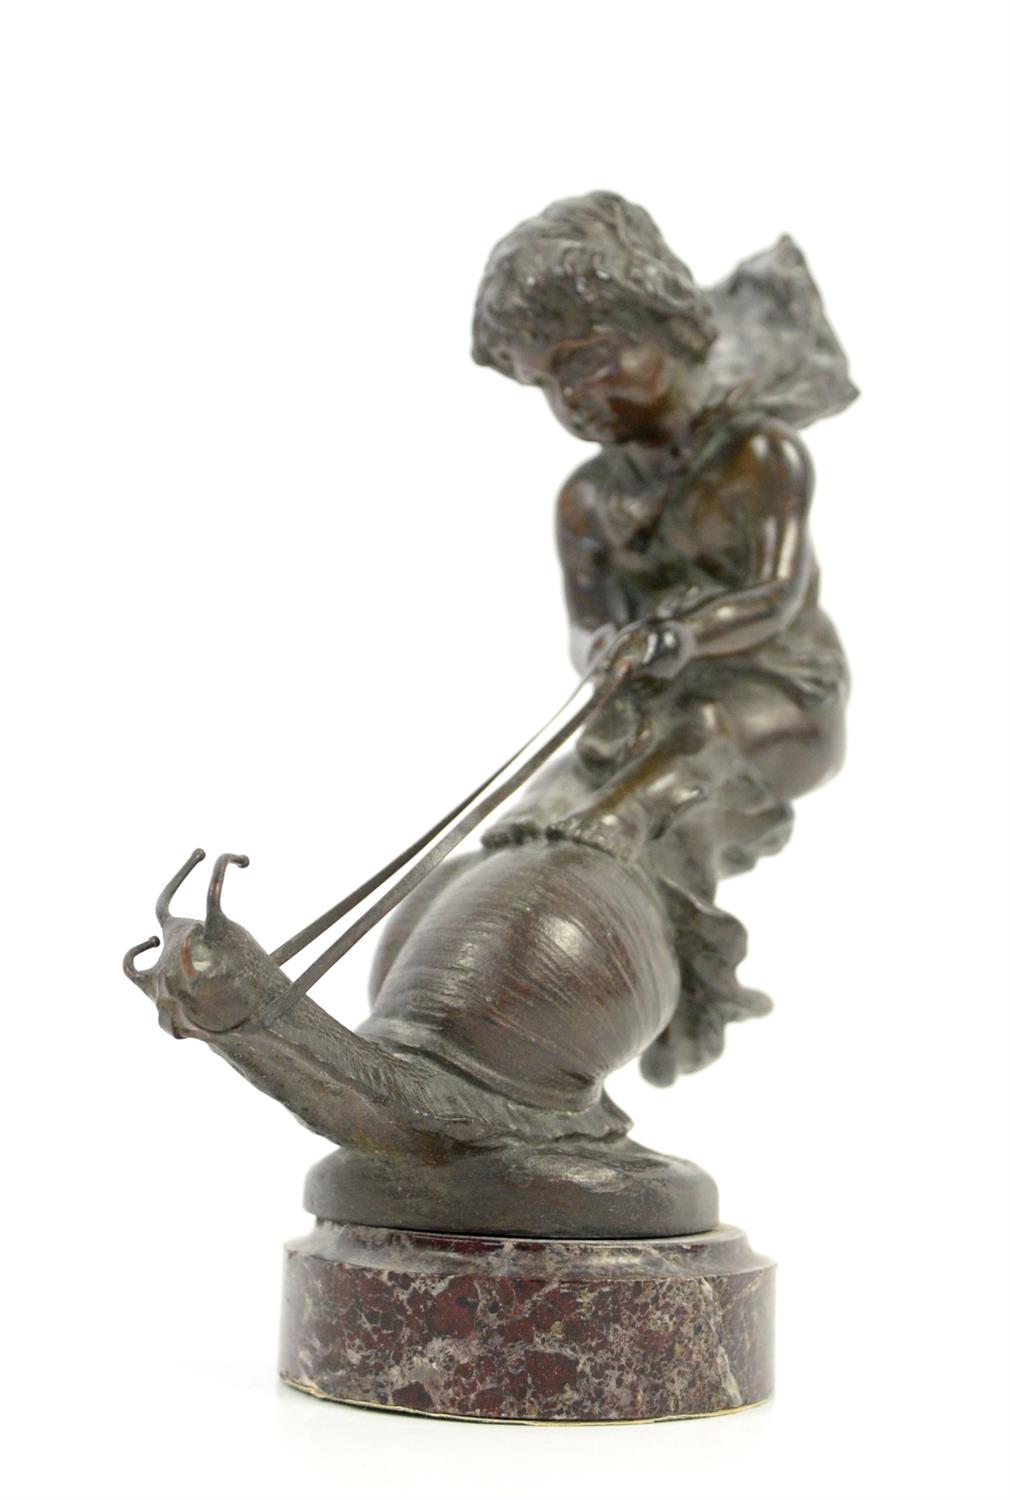 Art Nouveau bronze figure of a young boy or putto riding a snail, inscribed Galral de Serezin, h22. - Image 2 of 3